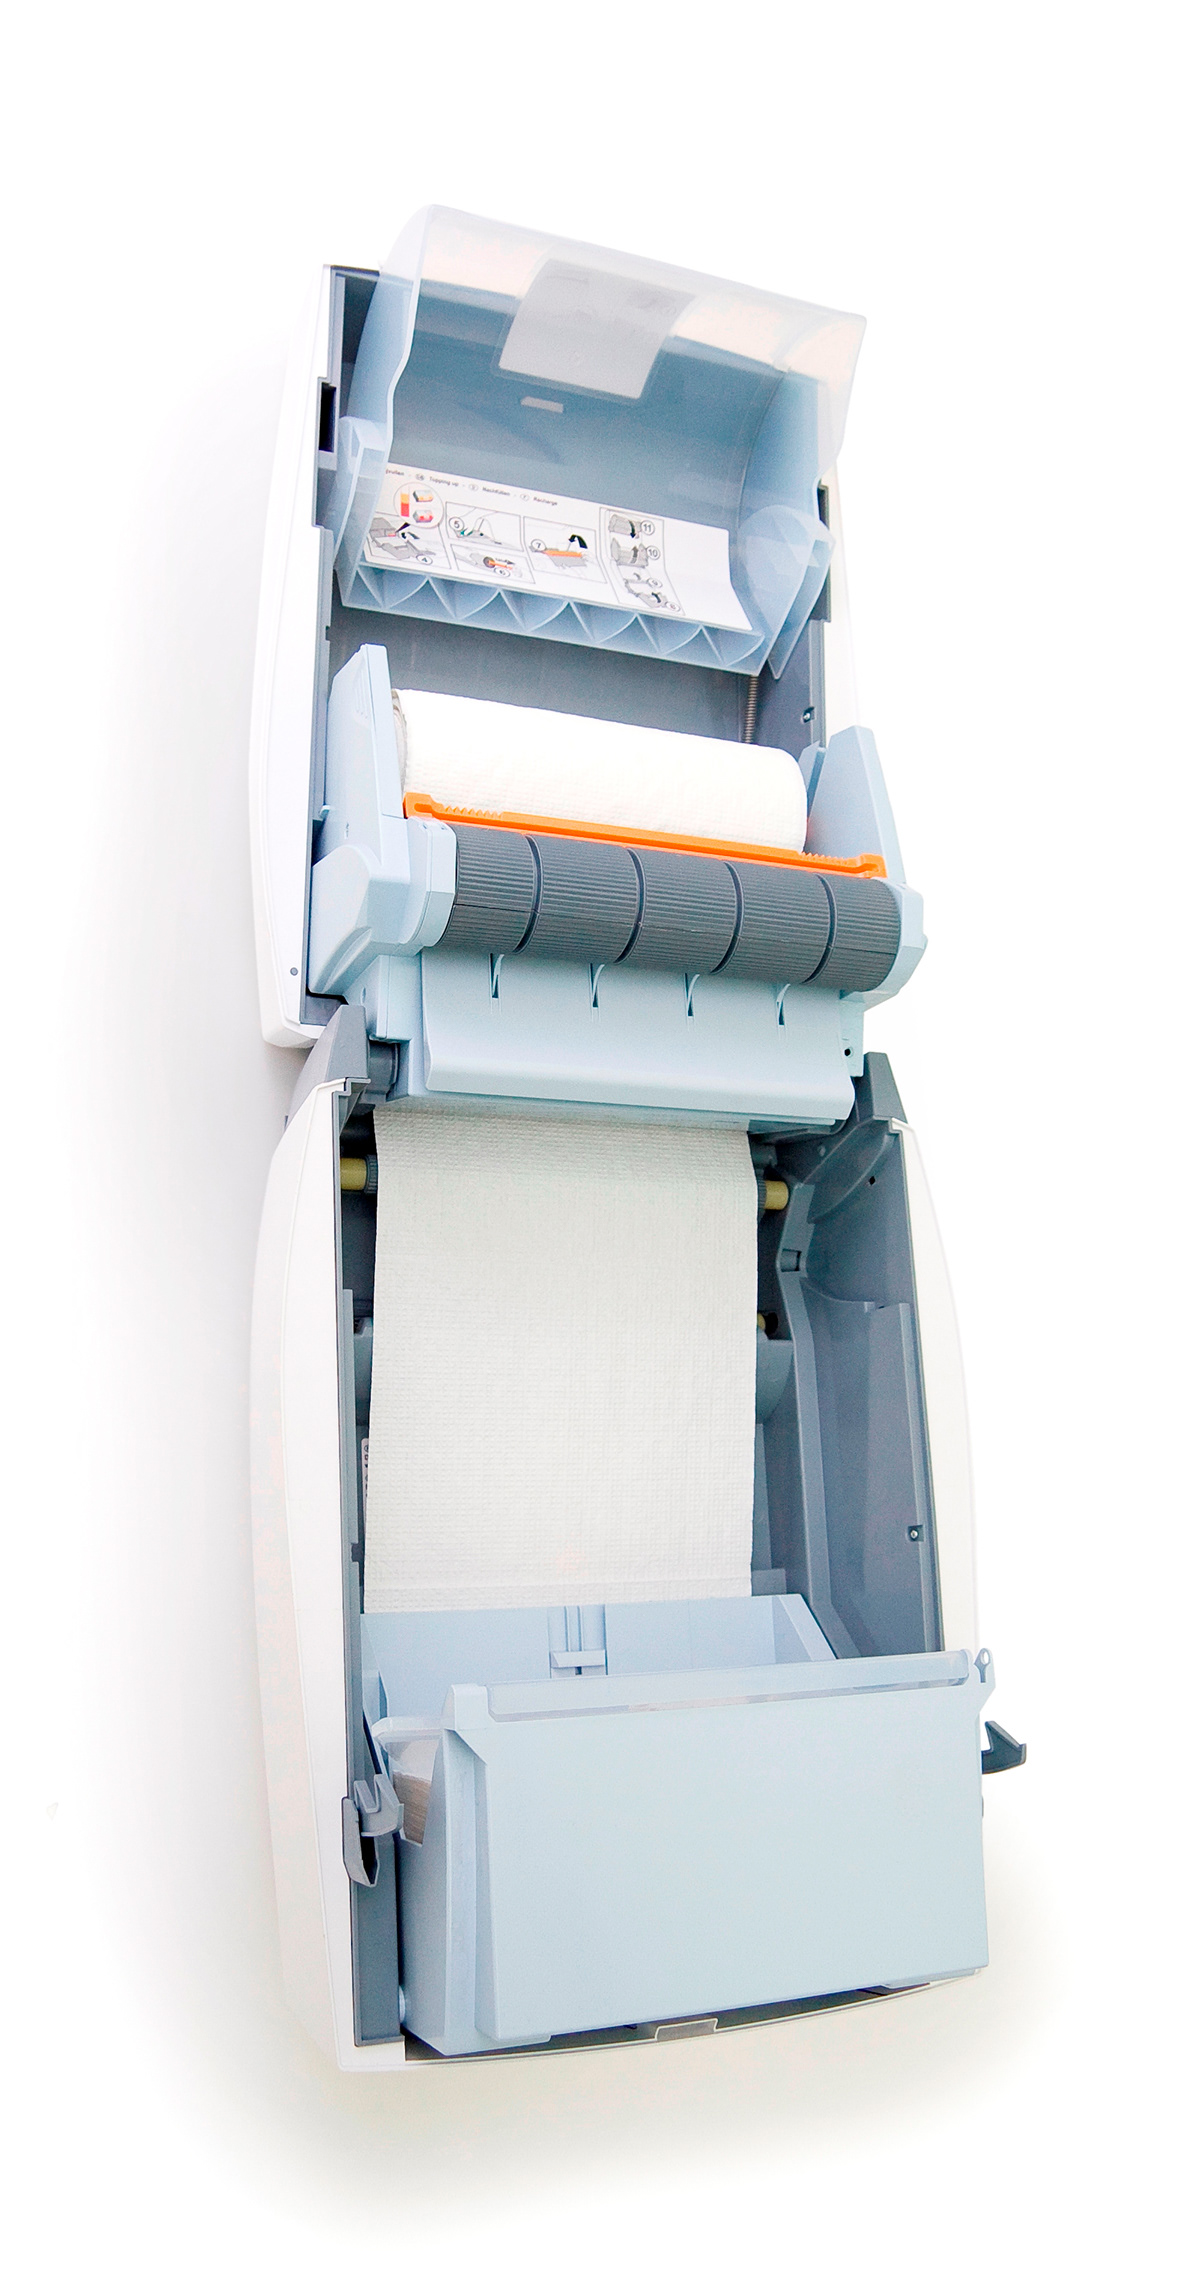 Vendor IQ vendor mmid Towel Dispensing Machine Towel Cabinet vision tradition Classic automatic Sensomatic